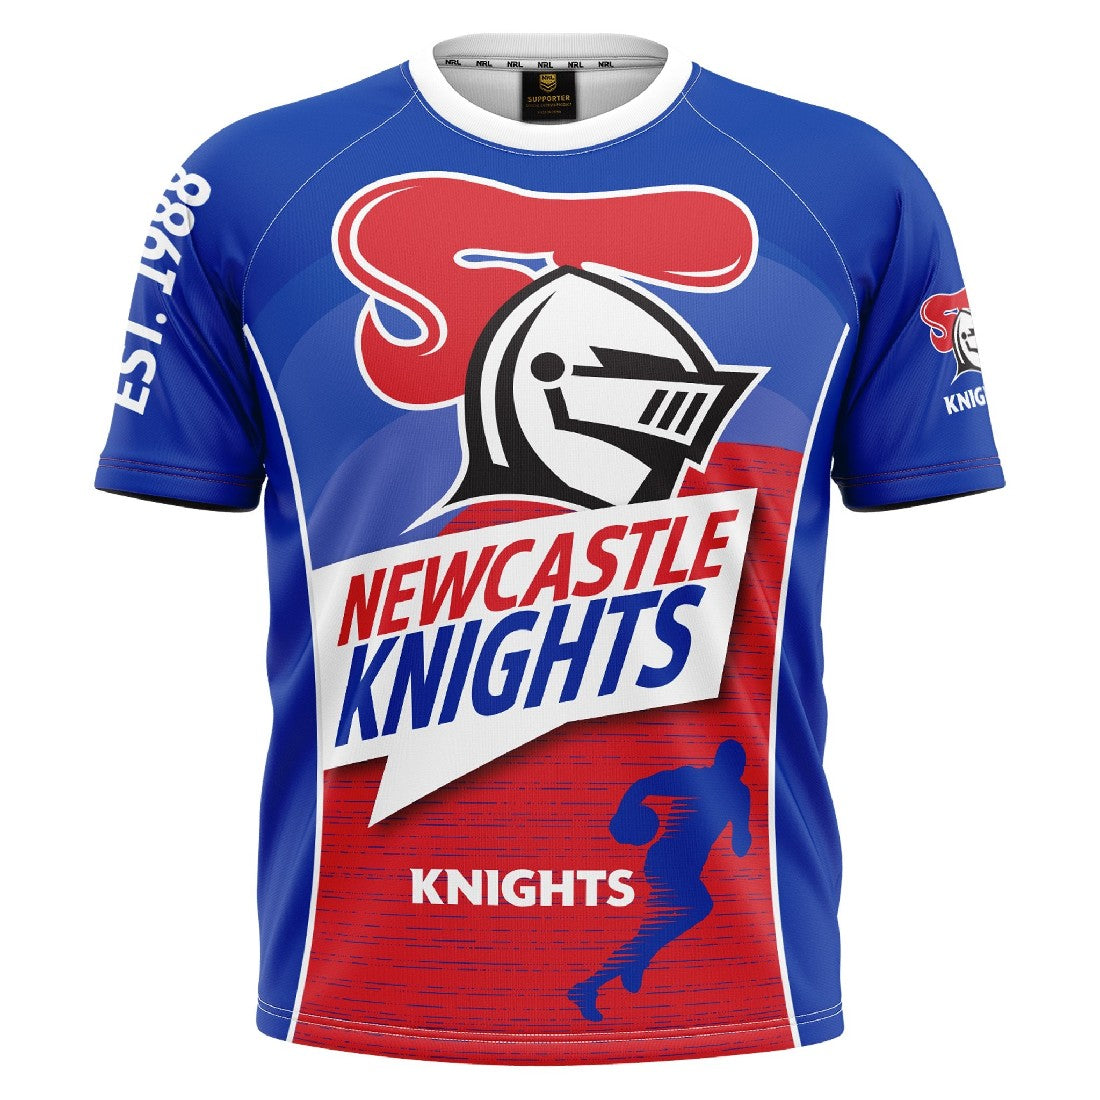 Newcastle Knights Mascot Tee